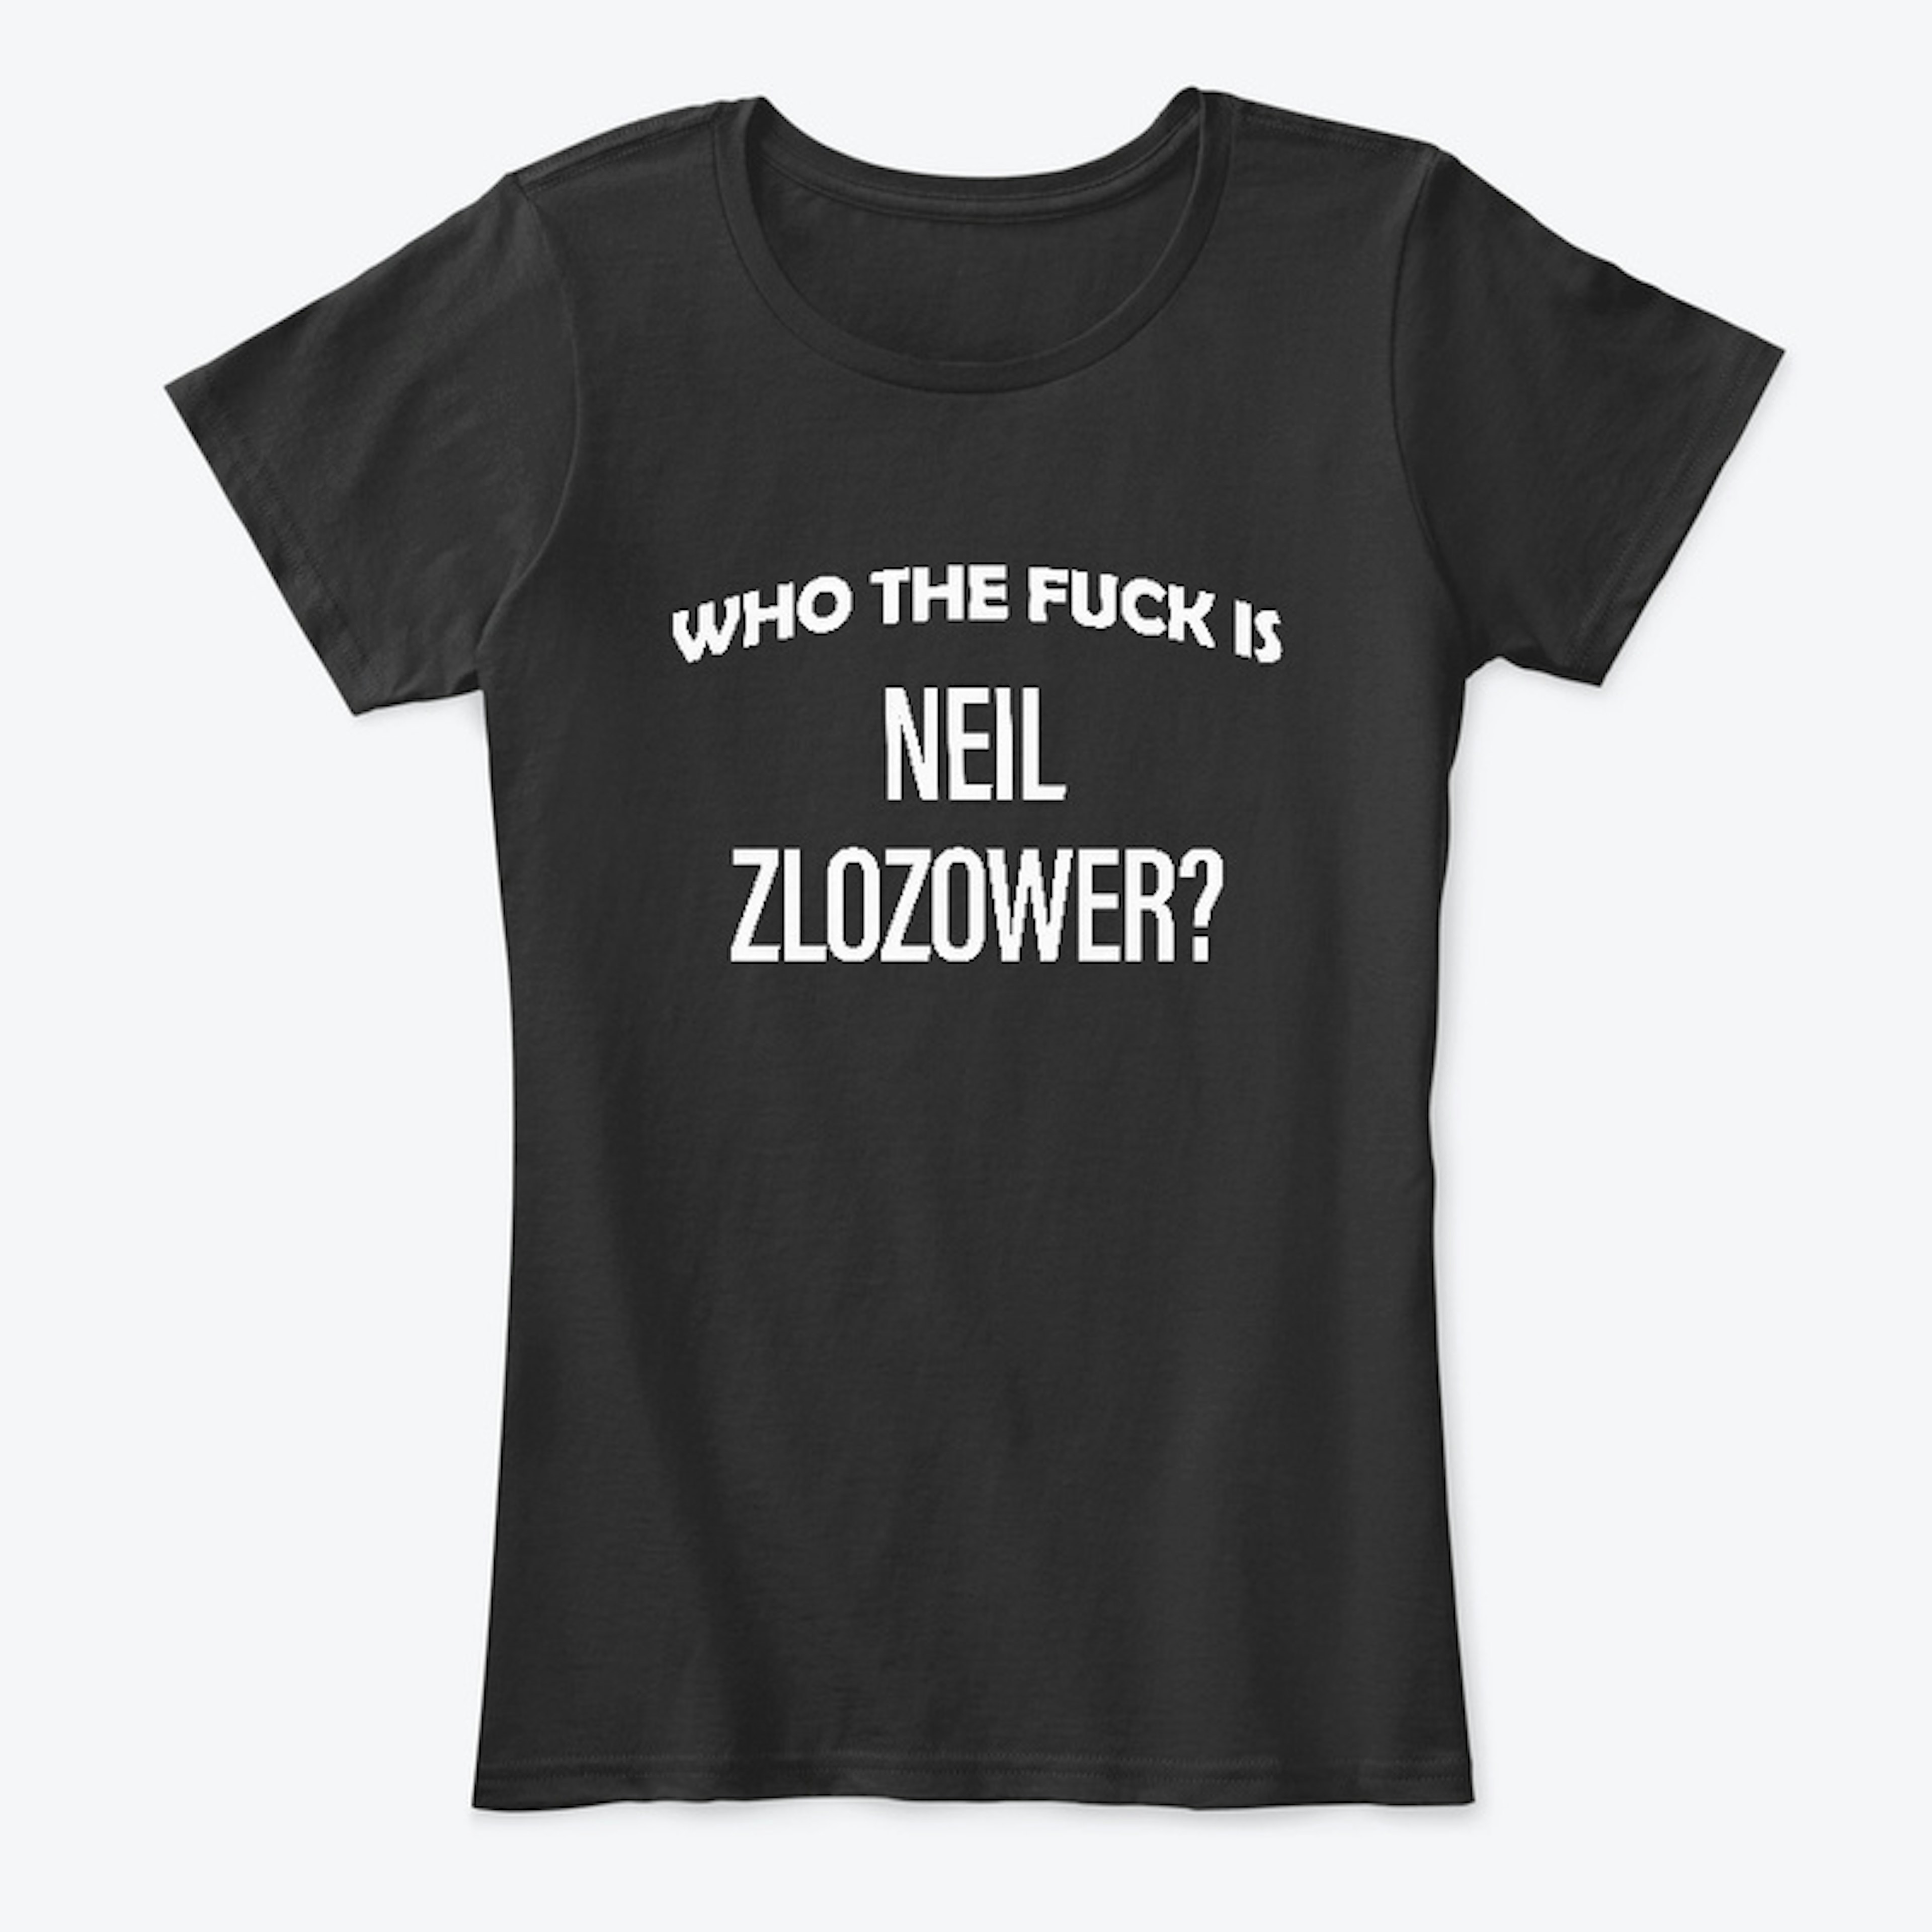 Who The Fuck Is Neil Zlozower?